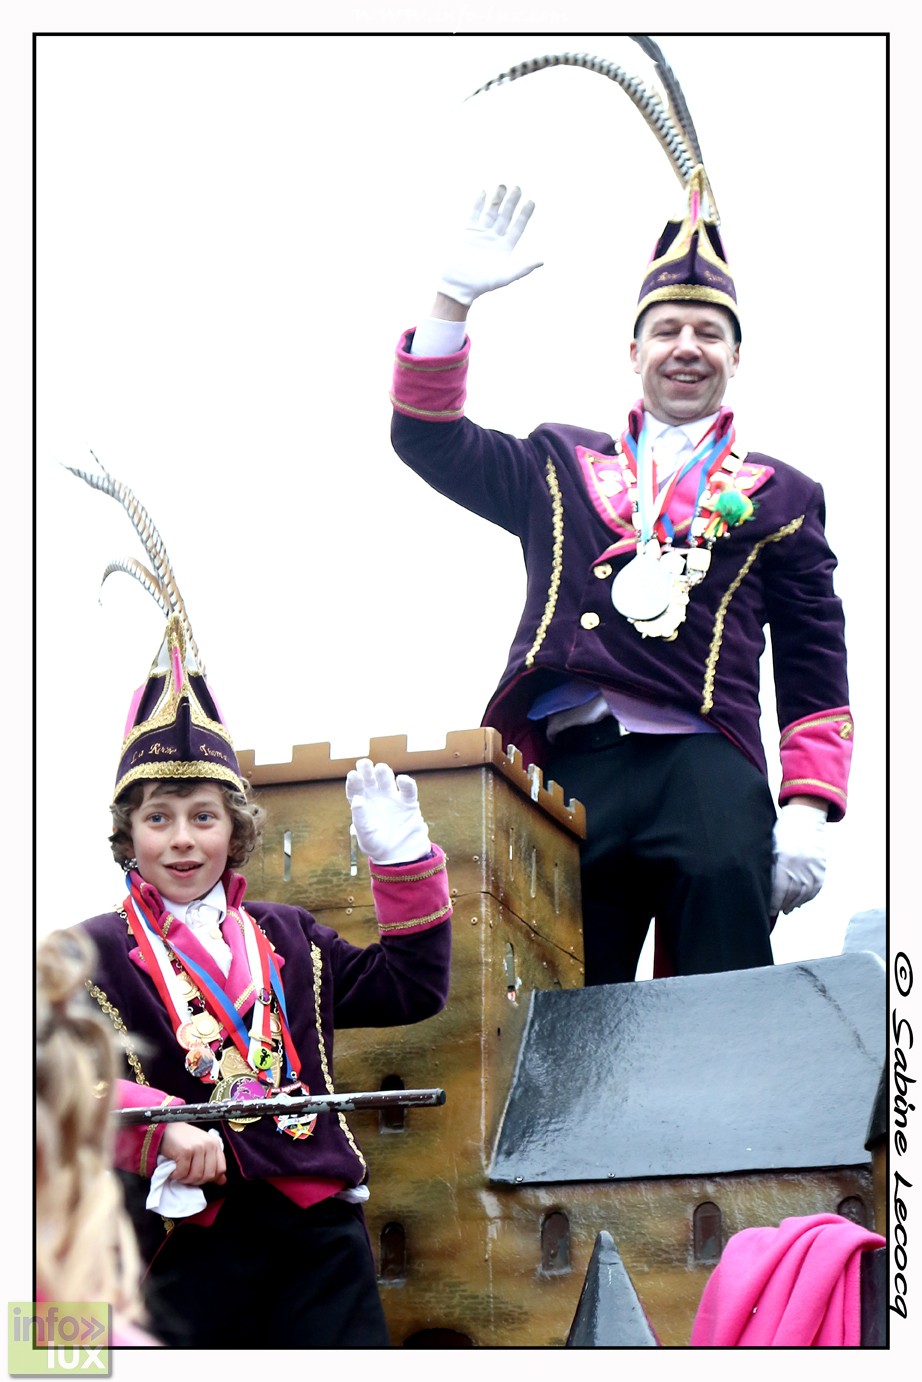 images/stories/PHOTOSREP/La-Roche-en-Ardenne/Carnaval2/Carnaval-larocheb182